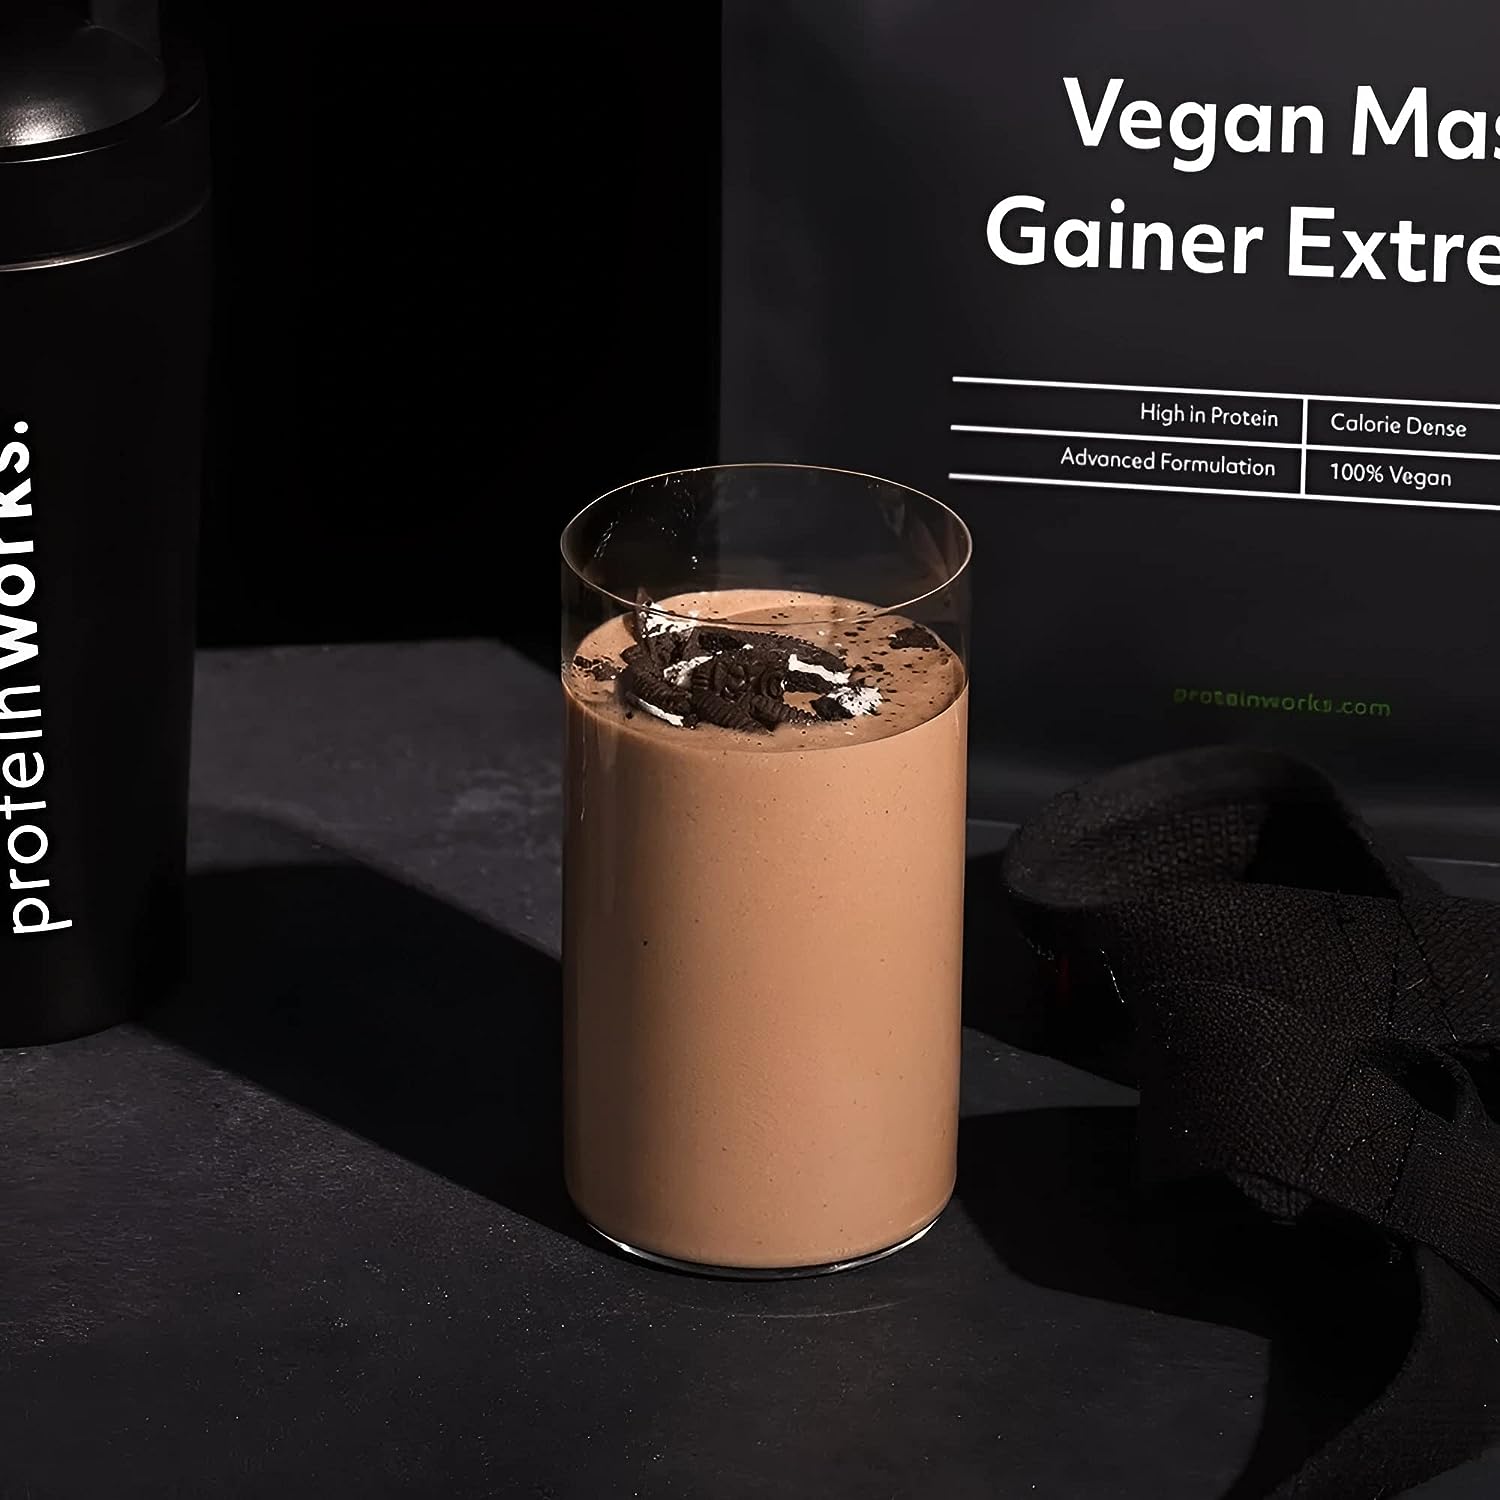 Protein Works - Vegan Mass Gainer - Chocolat Noisettes